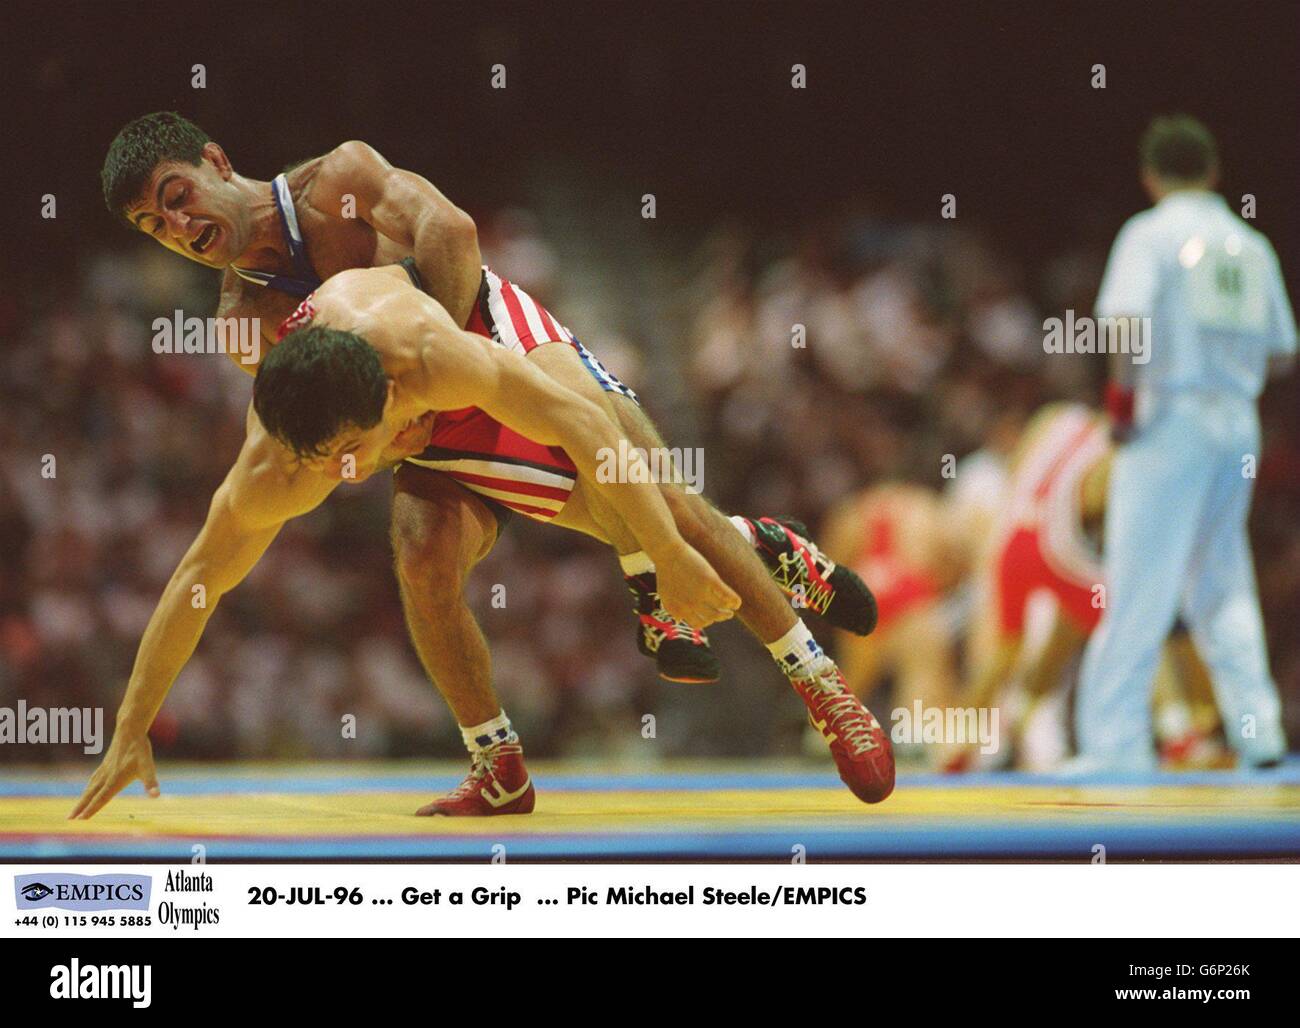 Atlanta Olympic Games 1996 - Gallo-Roman Wrestling. 20-JUL-96, ottenga un grip Foto Stock